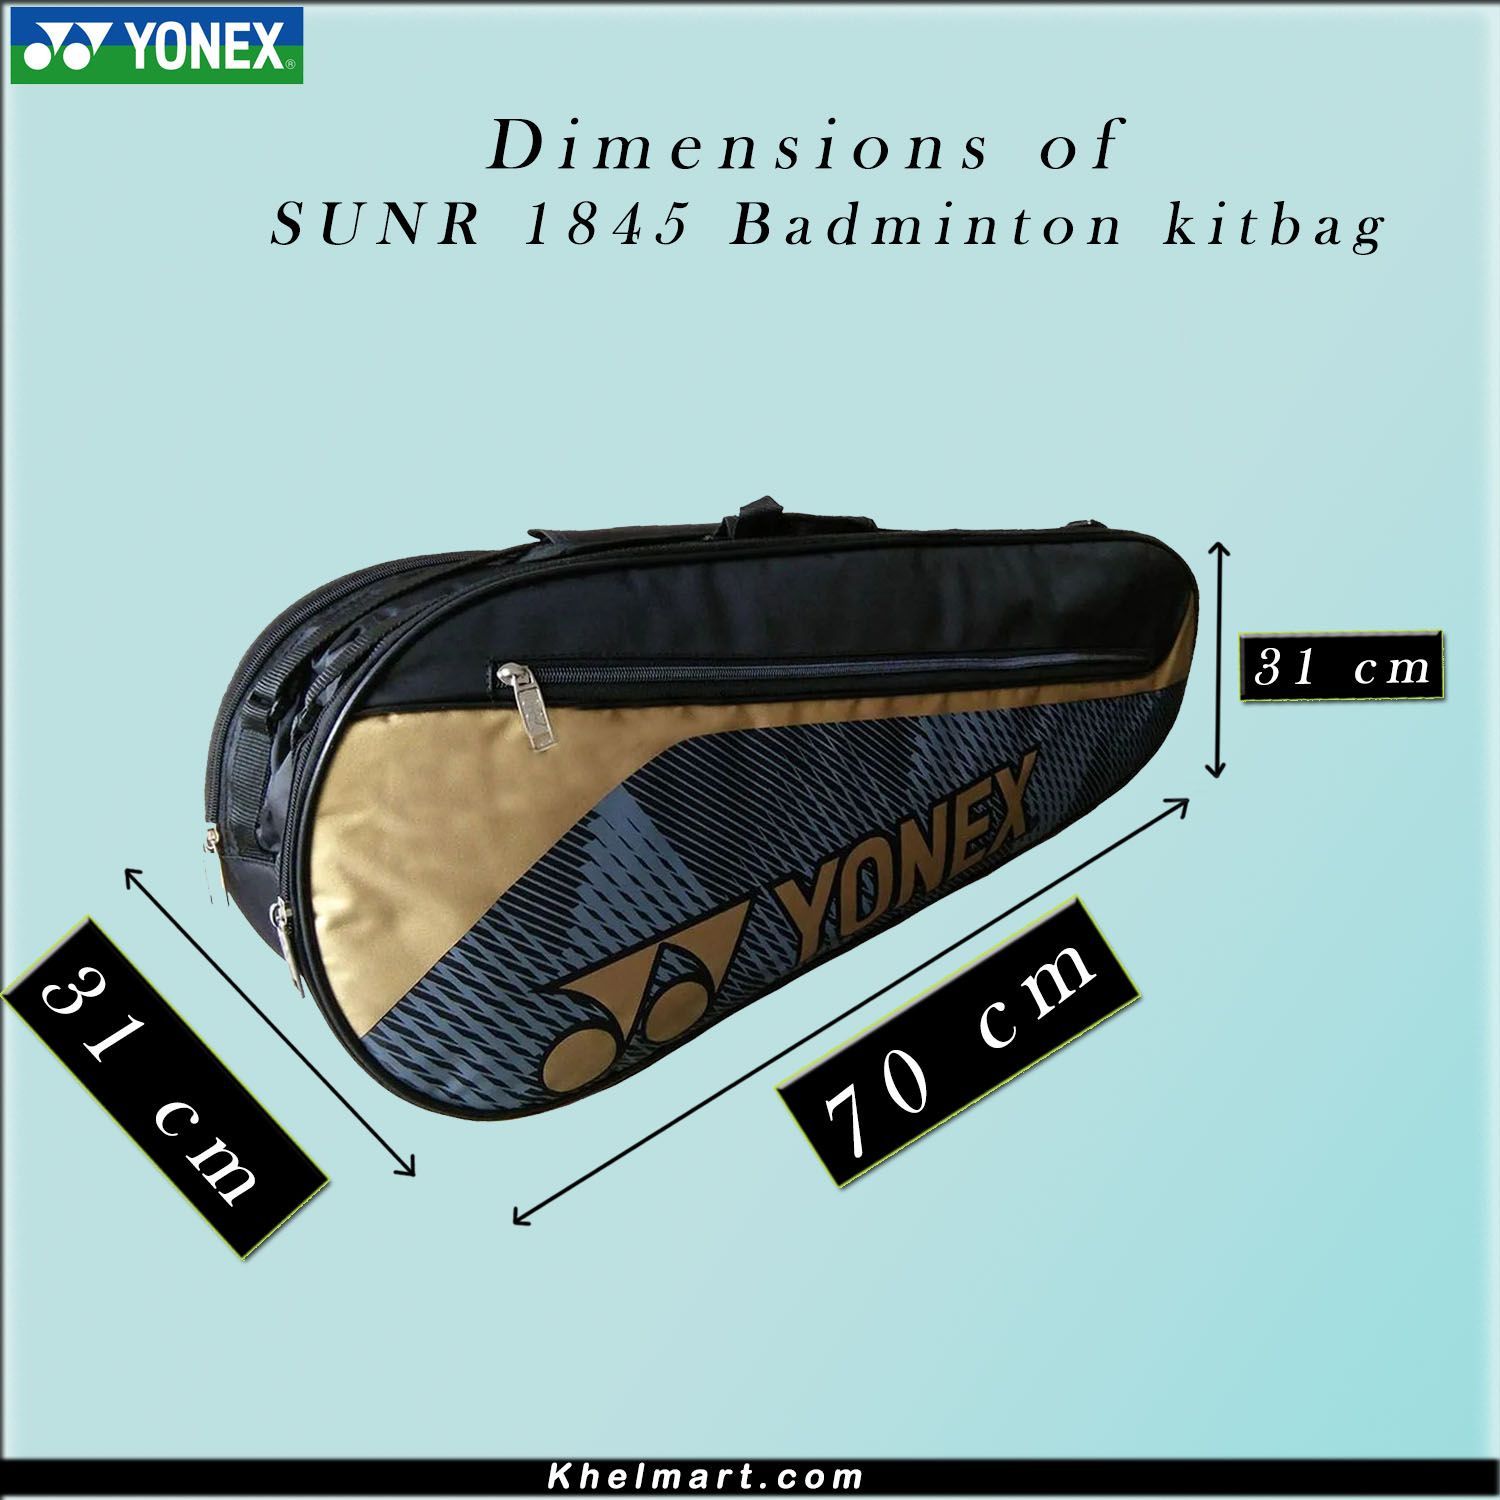 YONEX SUNR 1845 Thermal Badminton Kit Bag Black And Gold